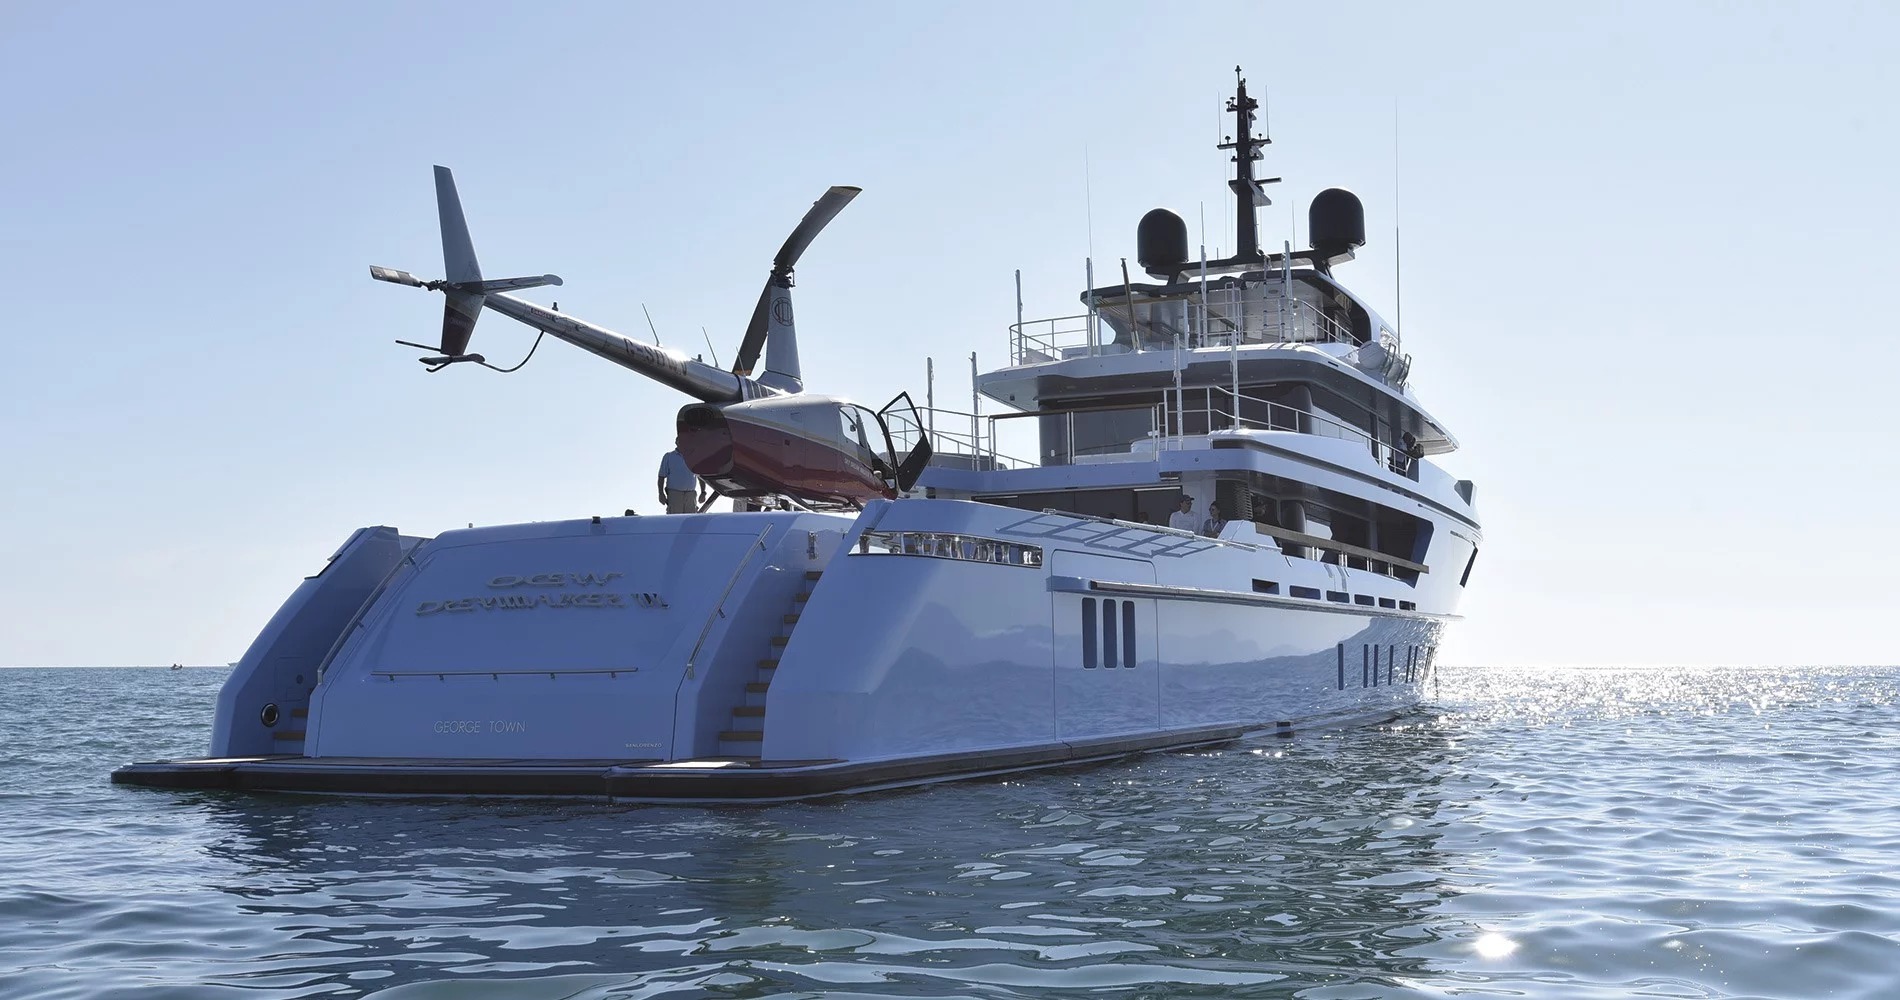 Yacht 500exp Hull 4 Sanlorenzo Charterworld Luxury Superyacht Charters